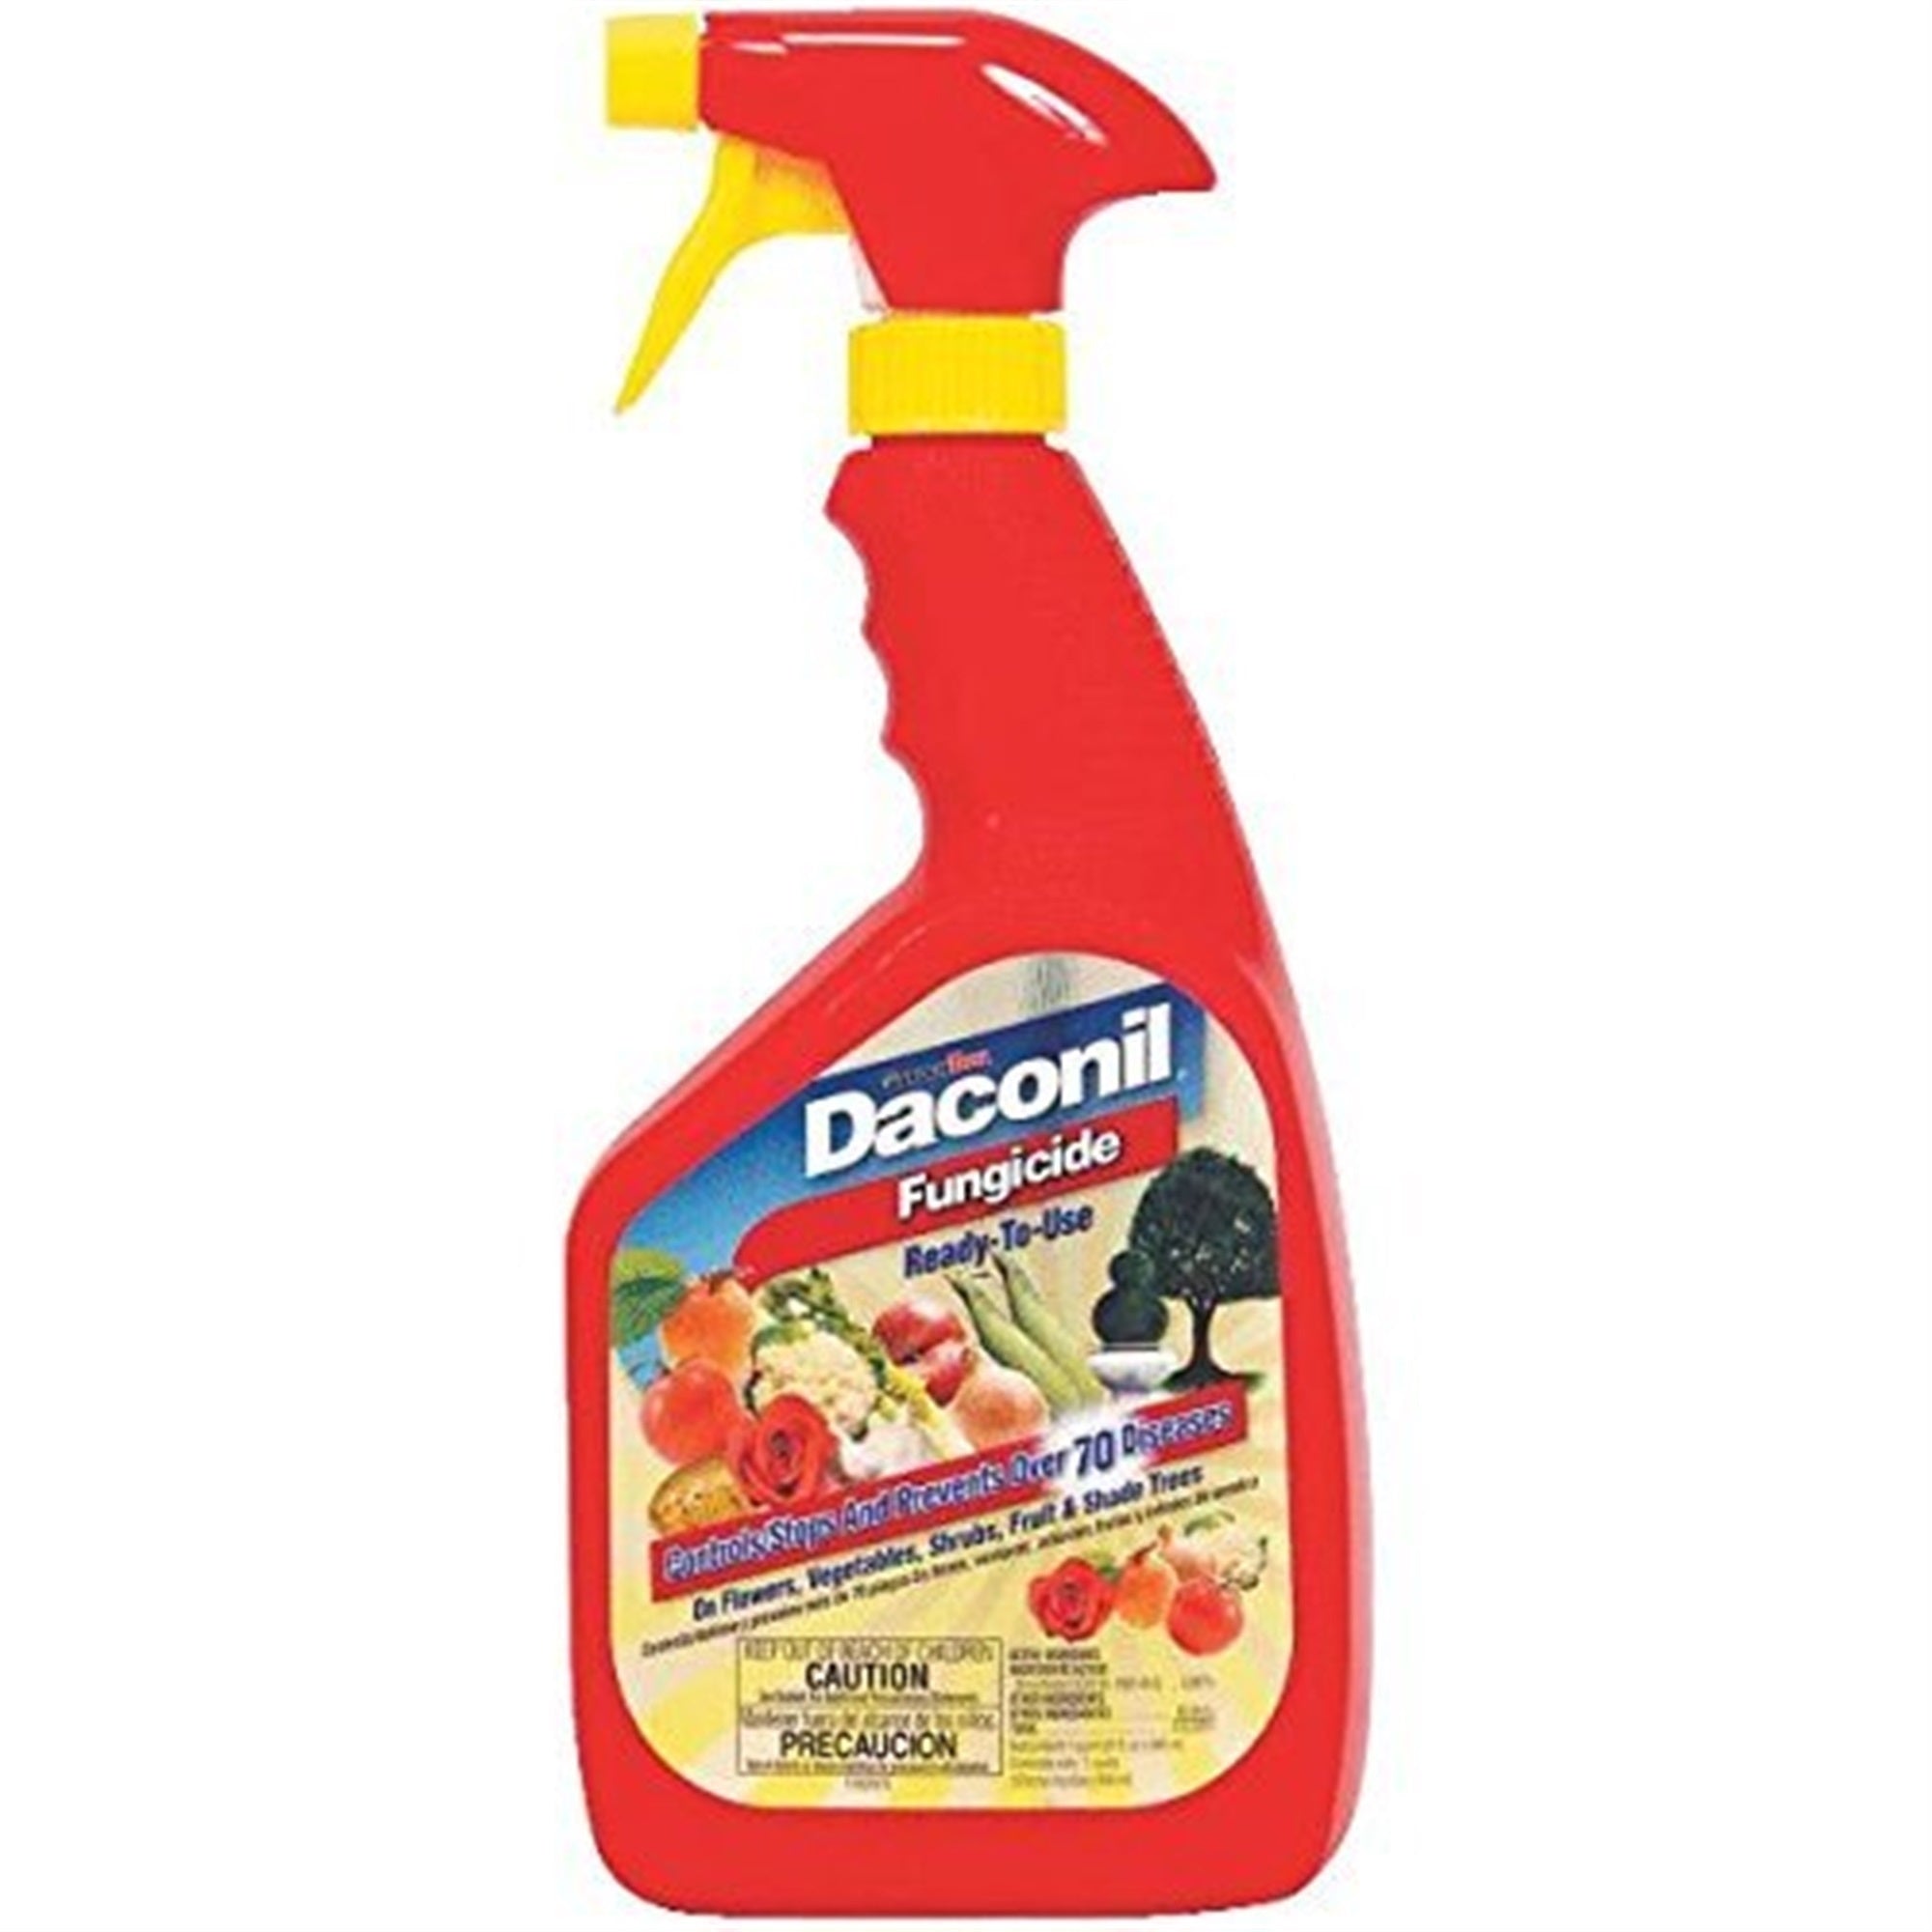 Daconil Ready To Use Trigger Spray Fungicide, 32 oz